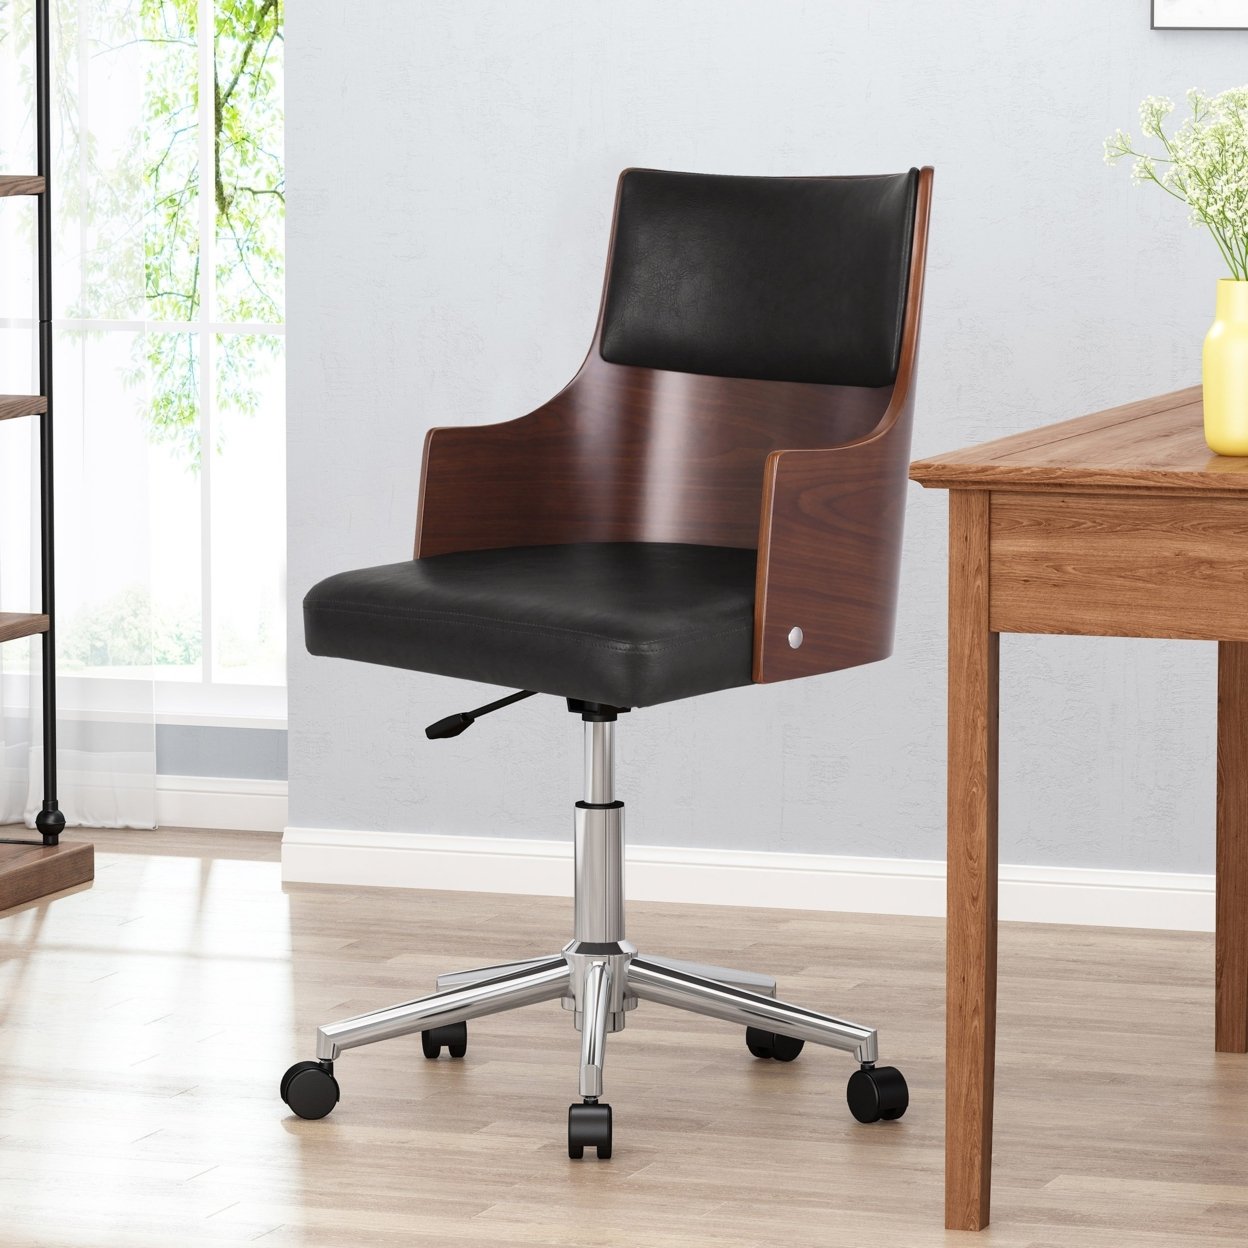 Arvilla Mid-Century Modern Upholstered Swivel Office Chair - Walnut/dark Brown/chrome